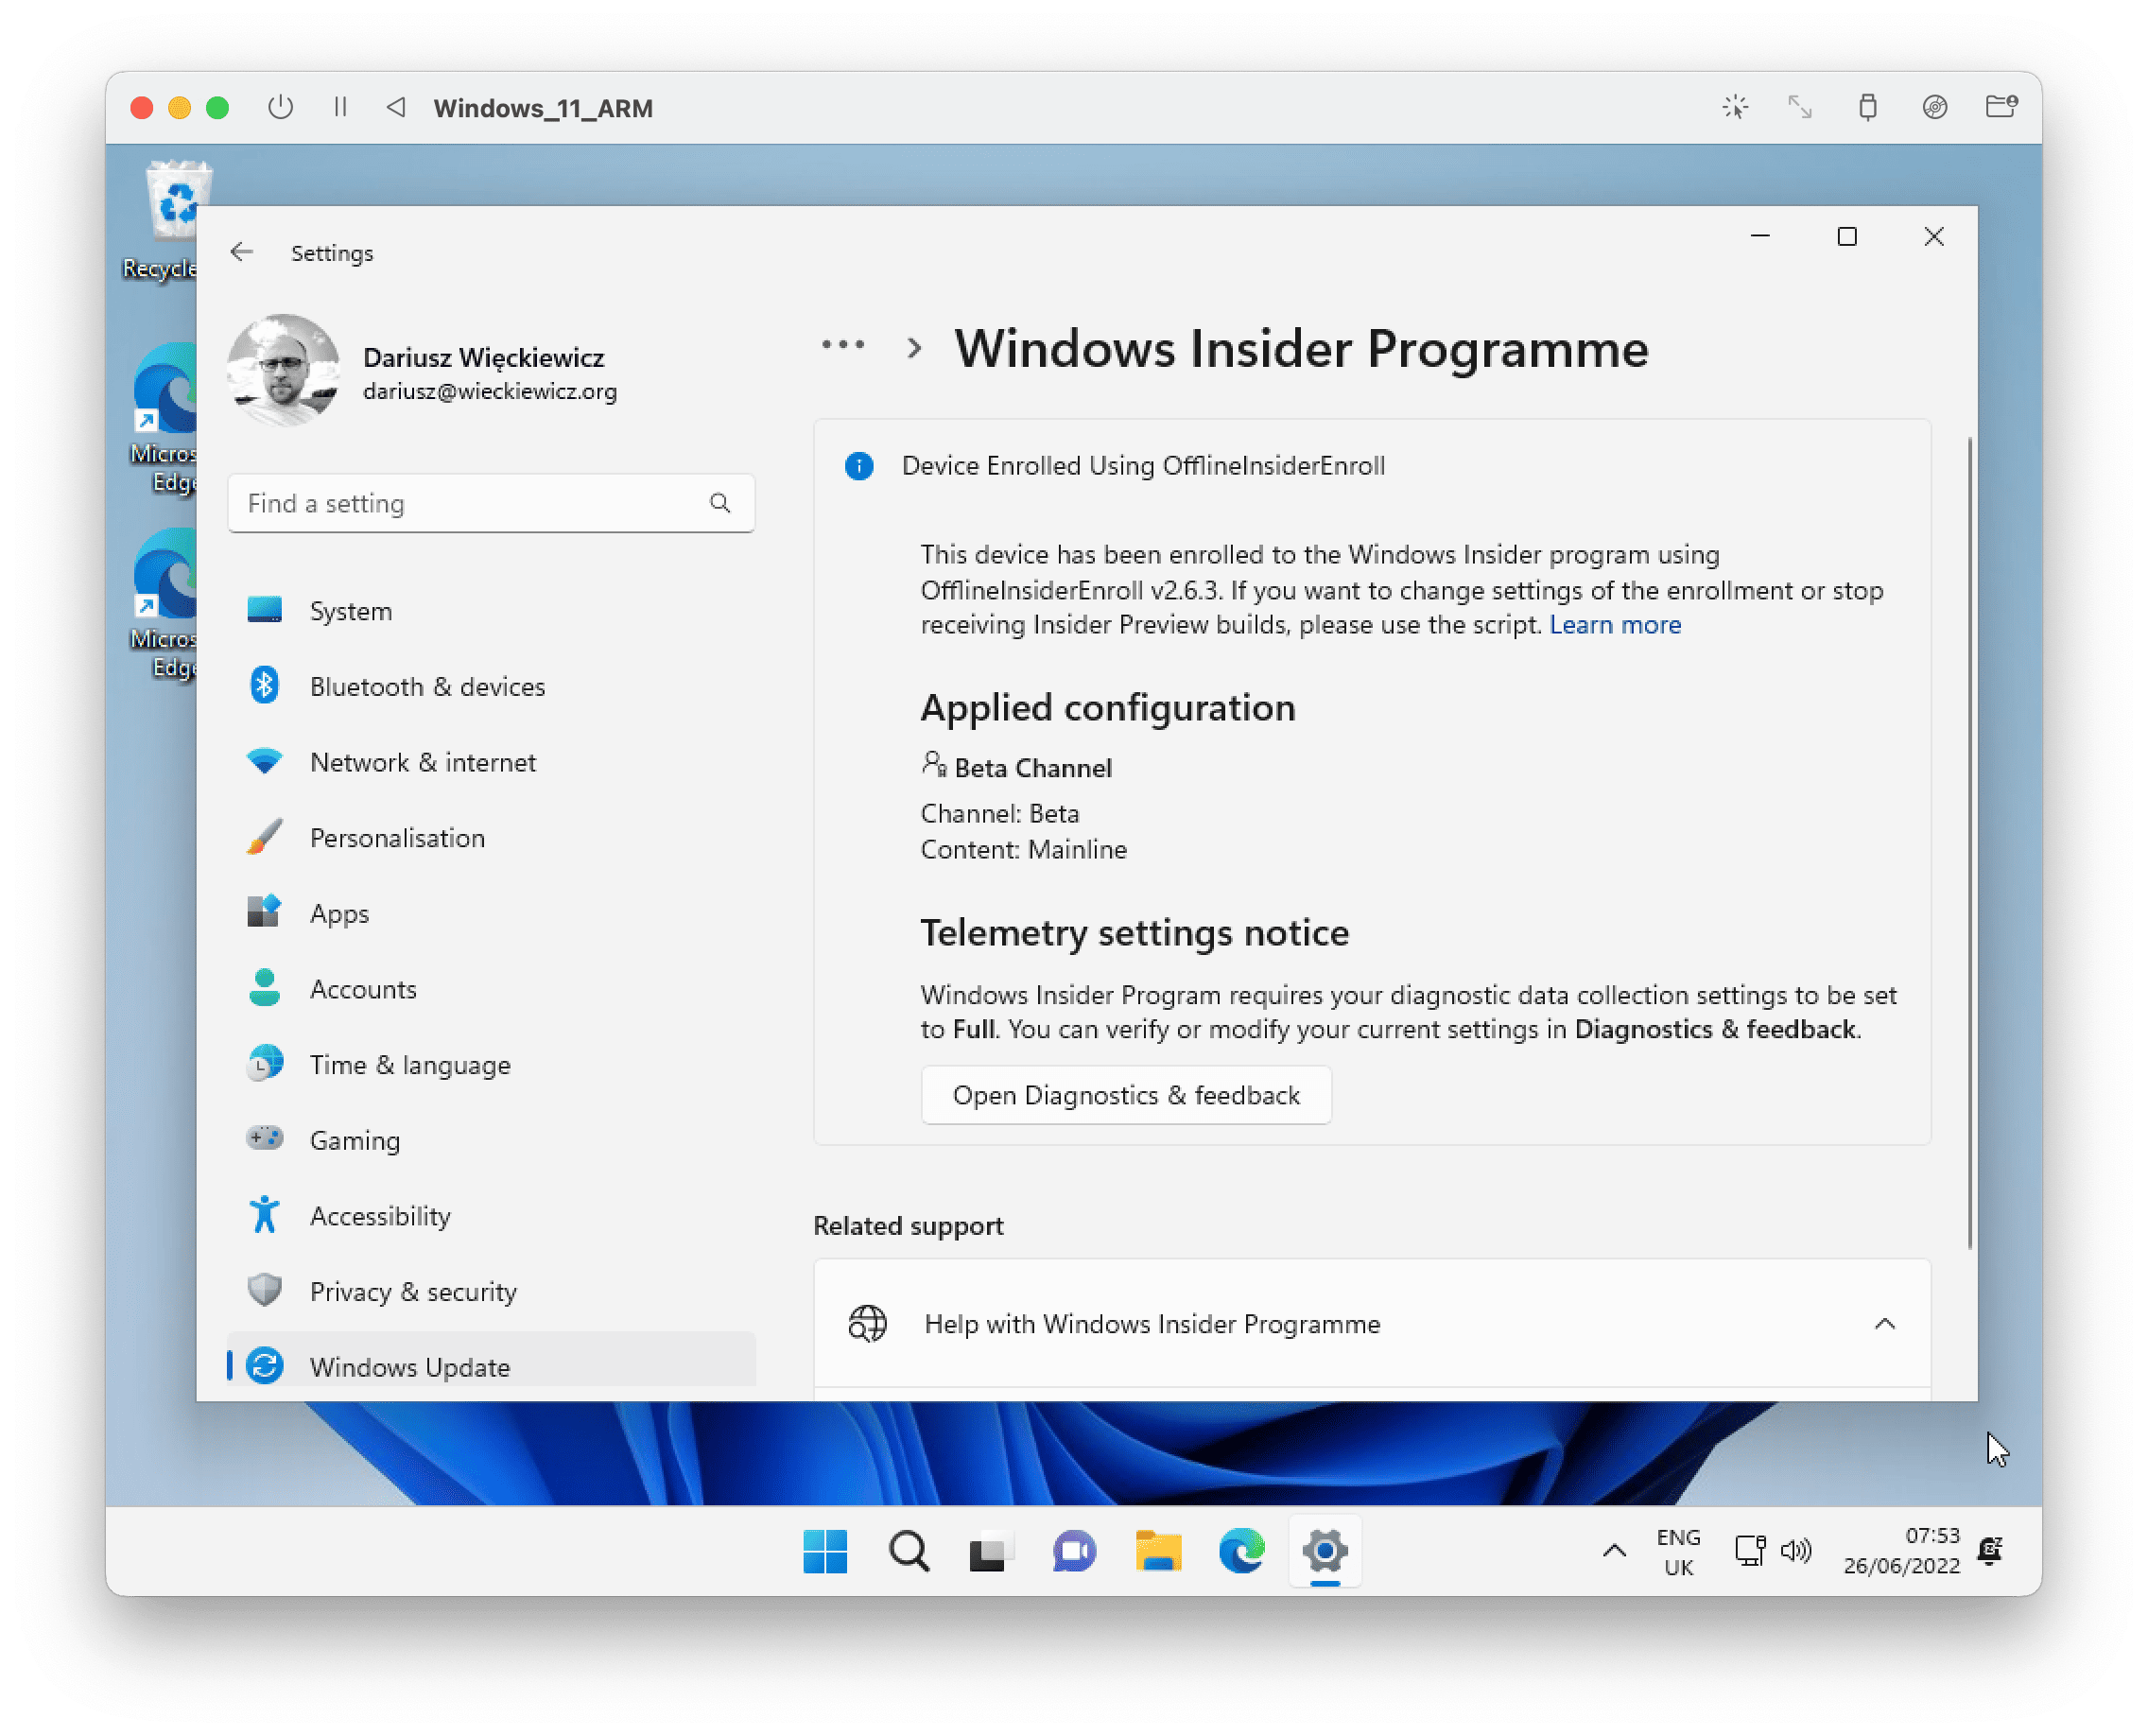 Windows Insider Programme - Device Enrolled Using OfflineInsiderEnroll